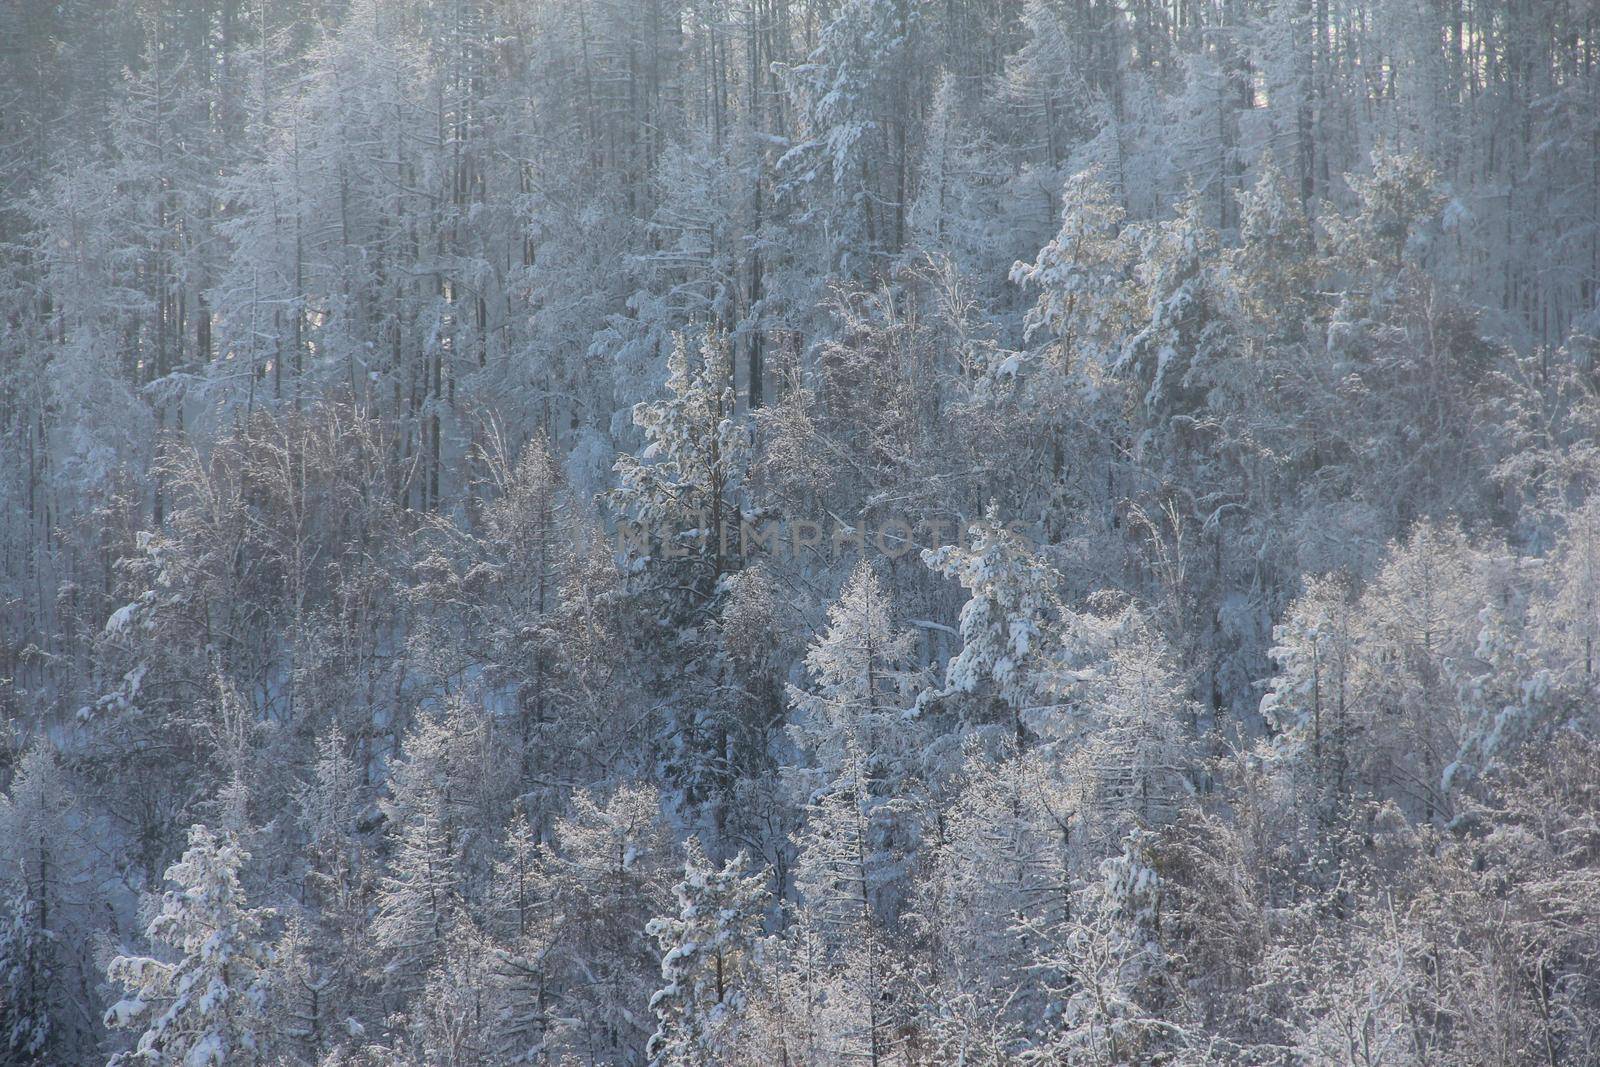 Forest winter Landscape by destillat